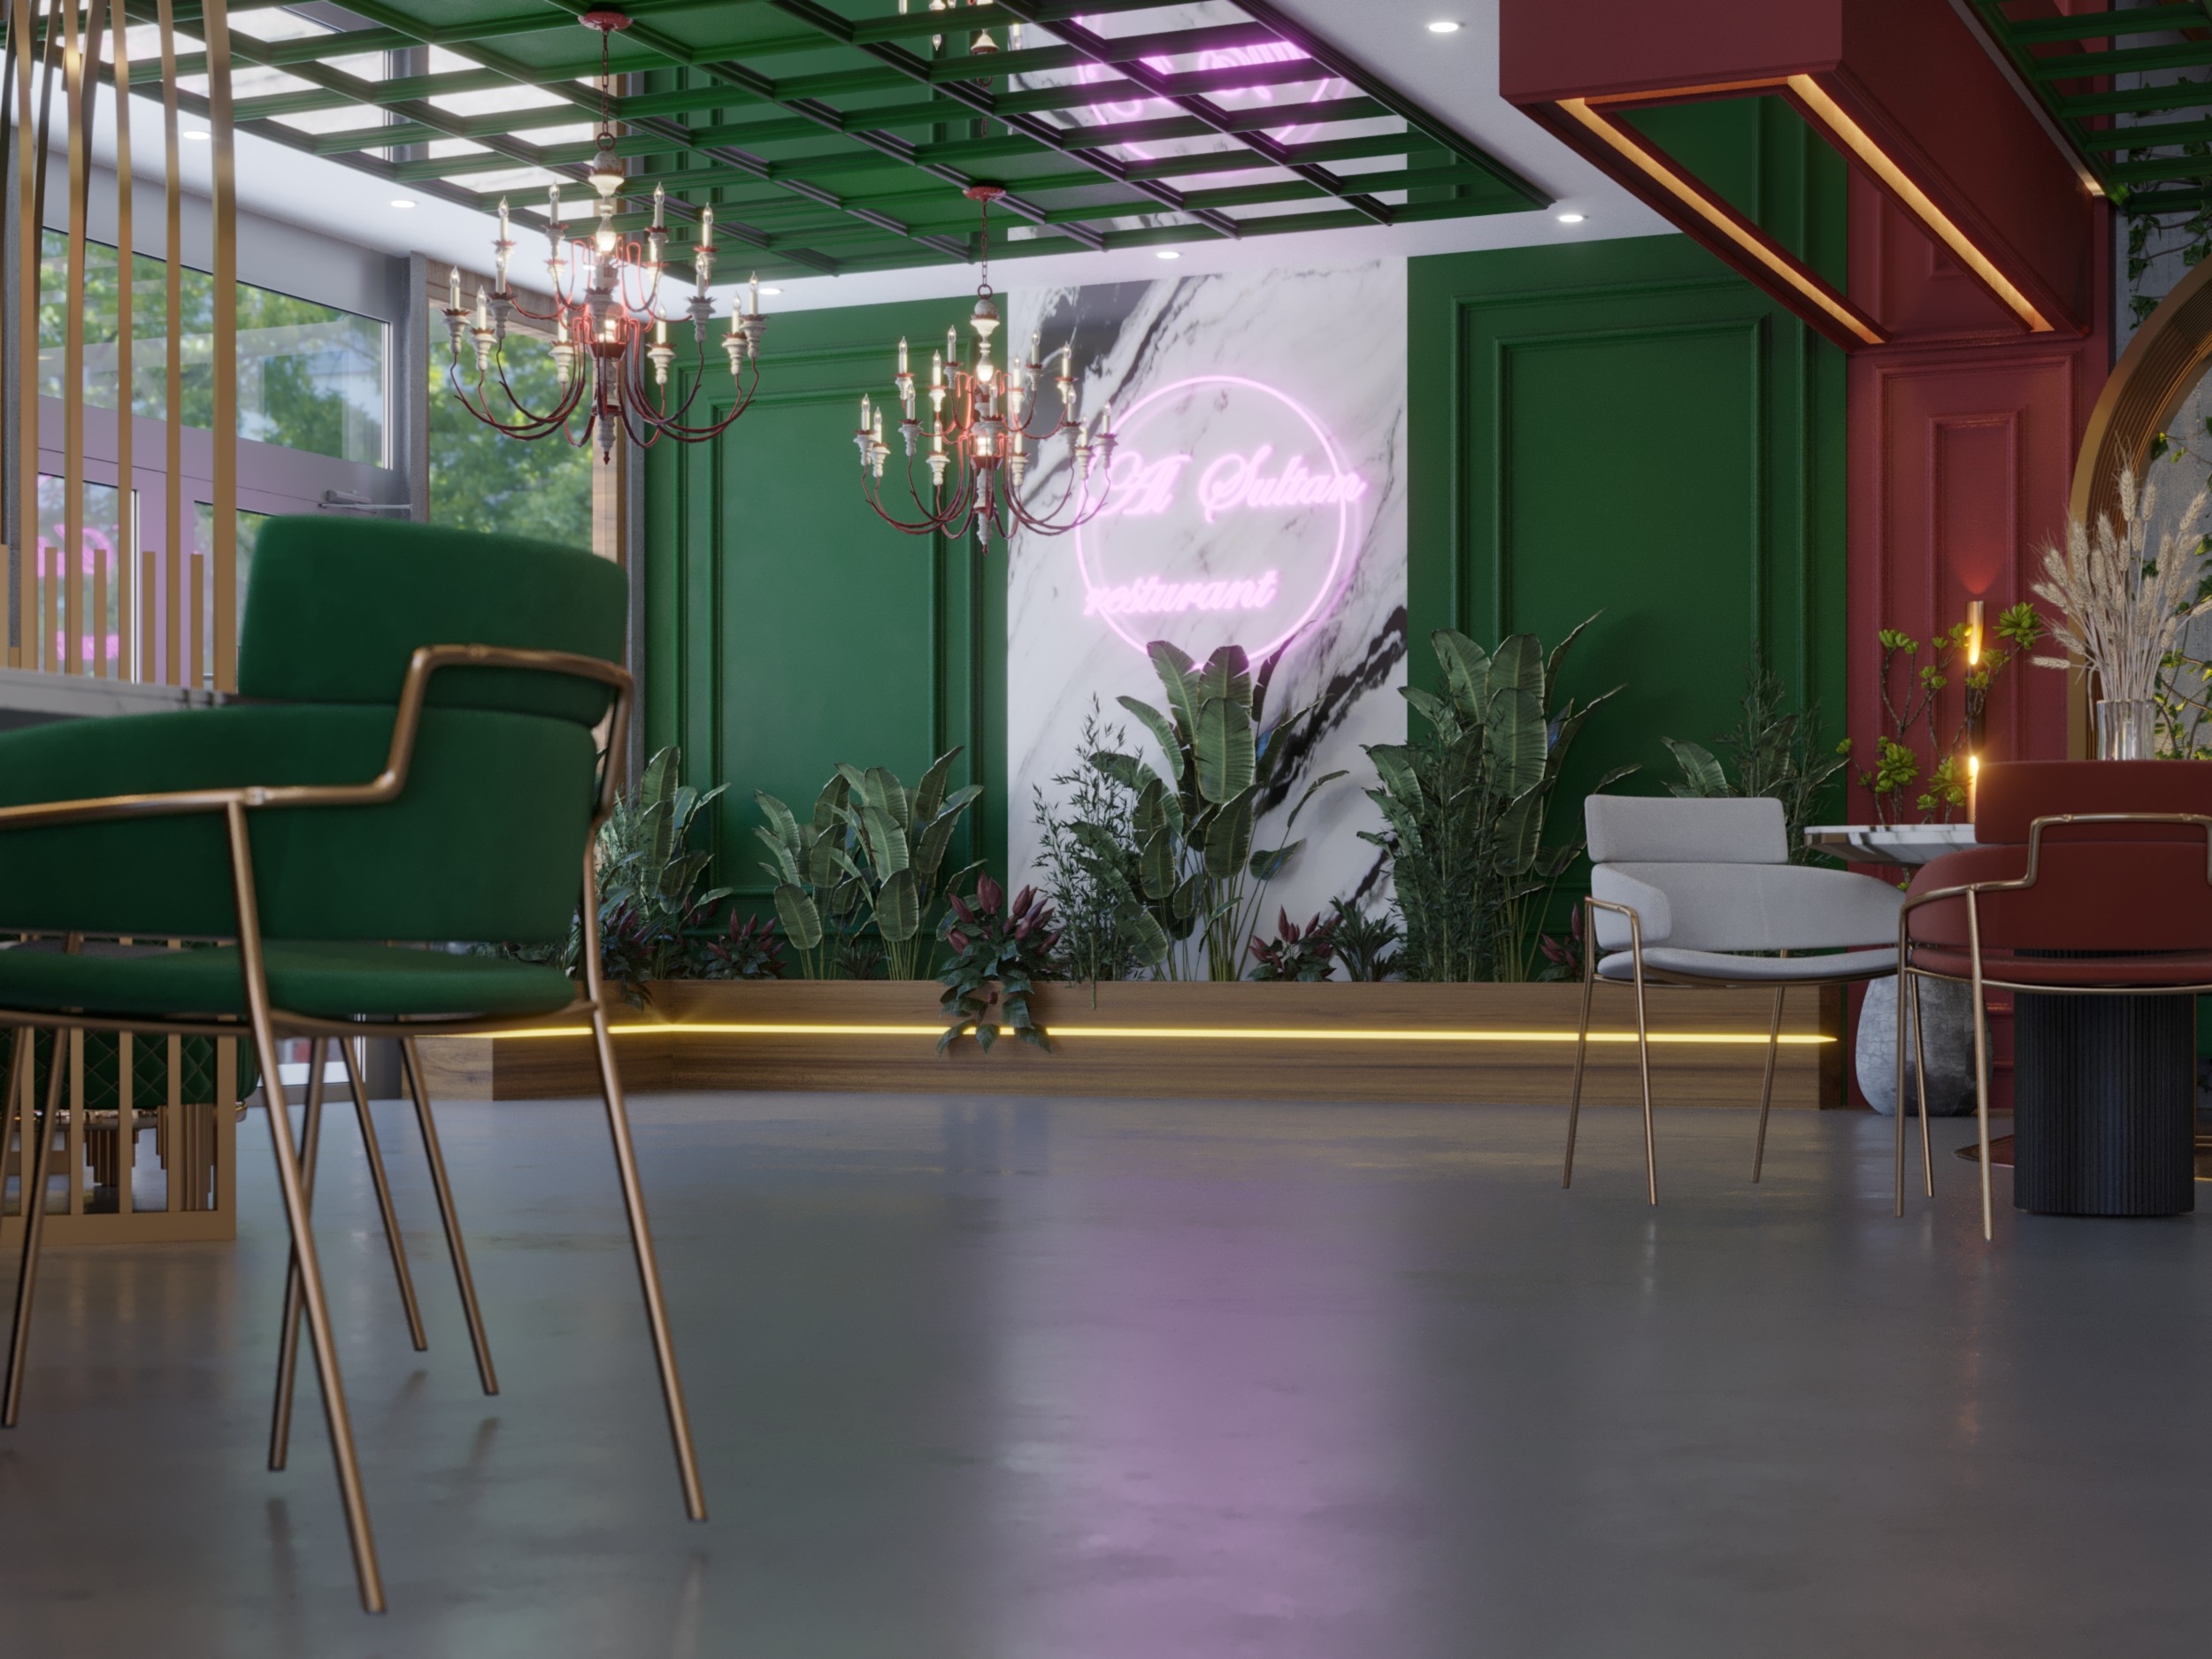 logo light - sultan restaurant - green - mirrors ceiling 